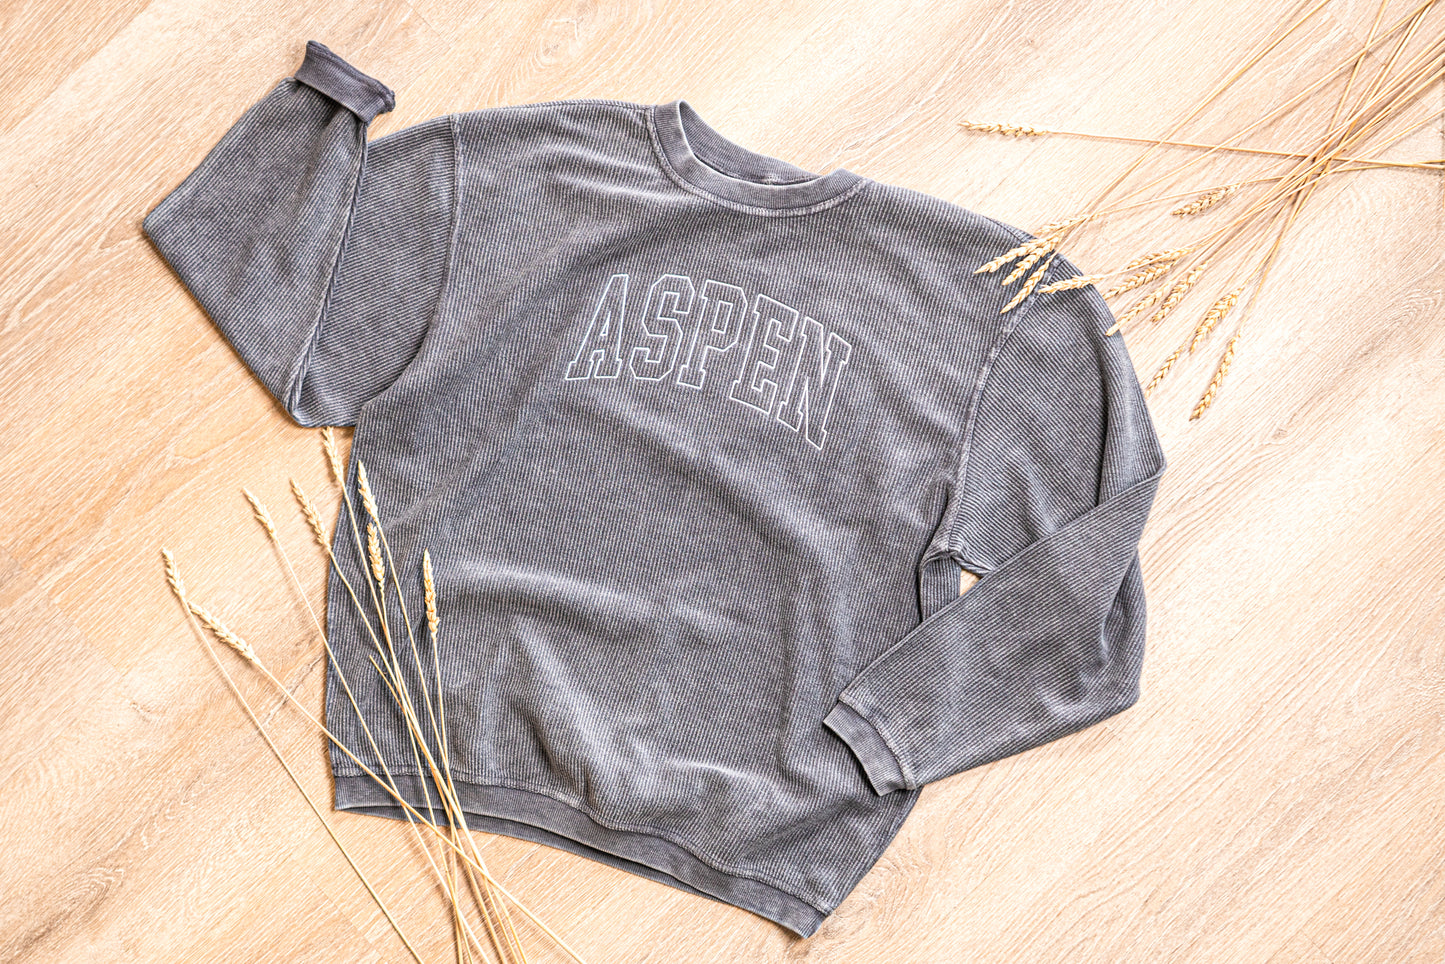 ASPEN (Varsity, White) - Embroidered Corded Sweatshirt (Charcoal)